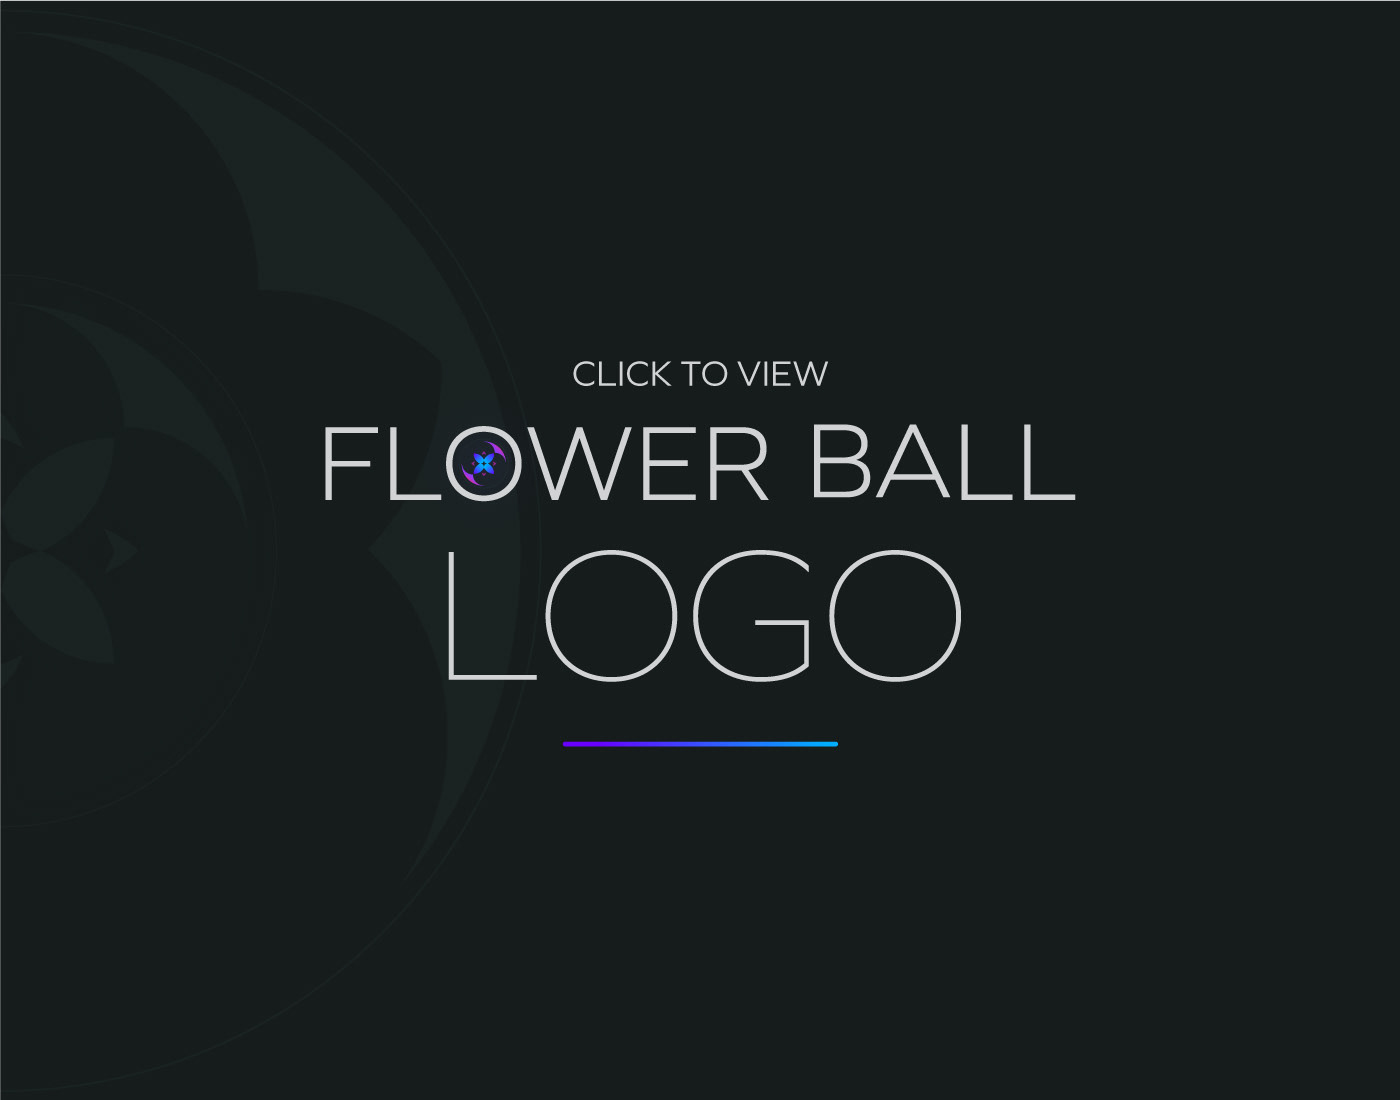 Flower ball logo flowerball Forqan khan graphic design  logo by Forqan Logo Design